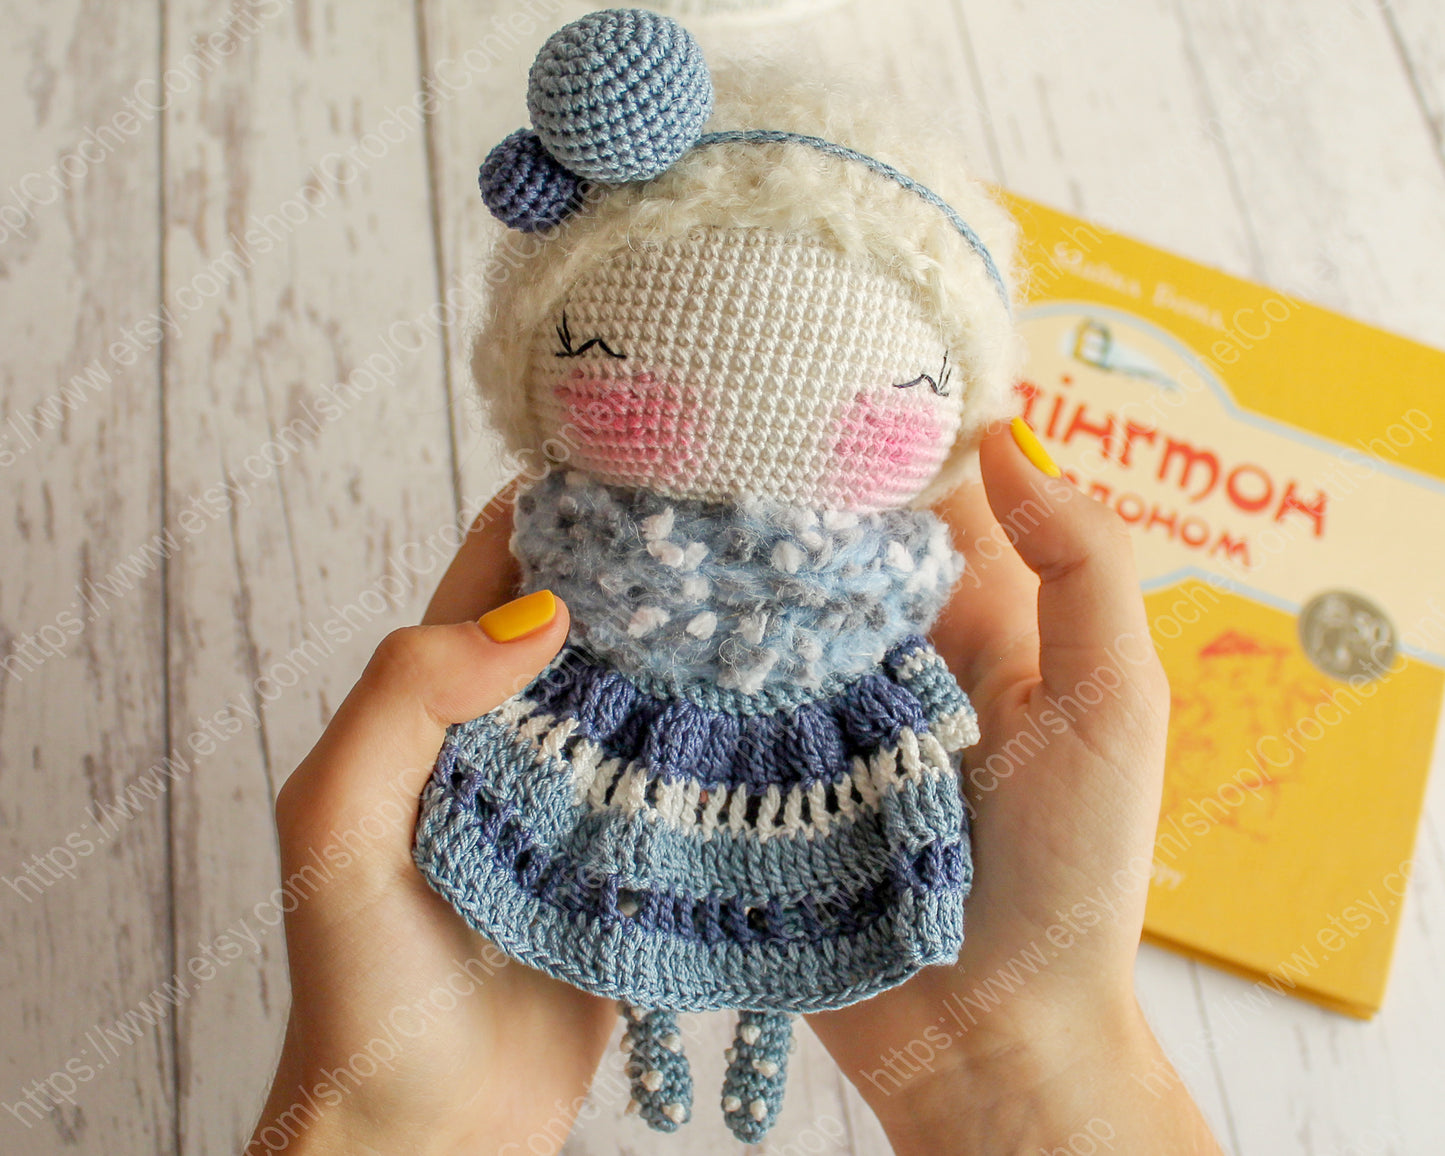 crochet doll snowgirl